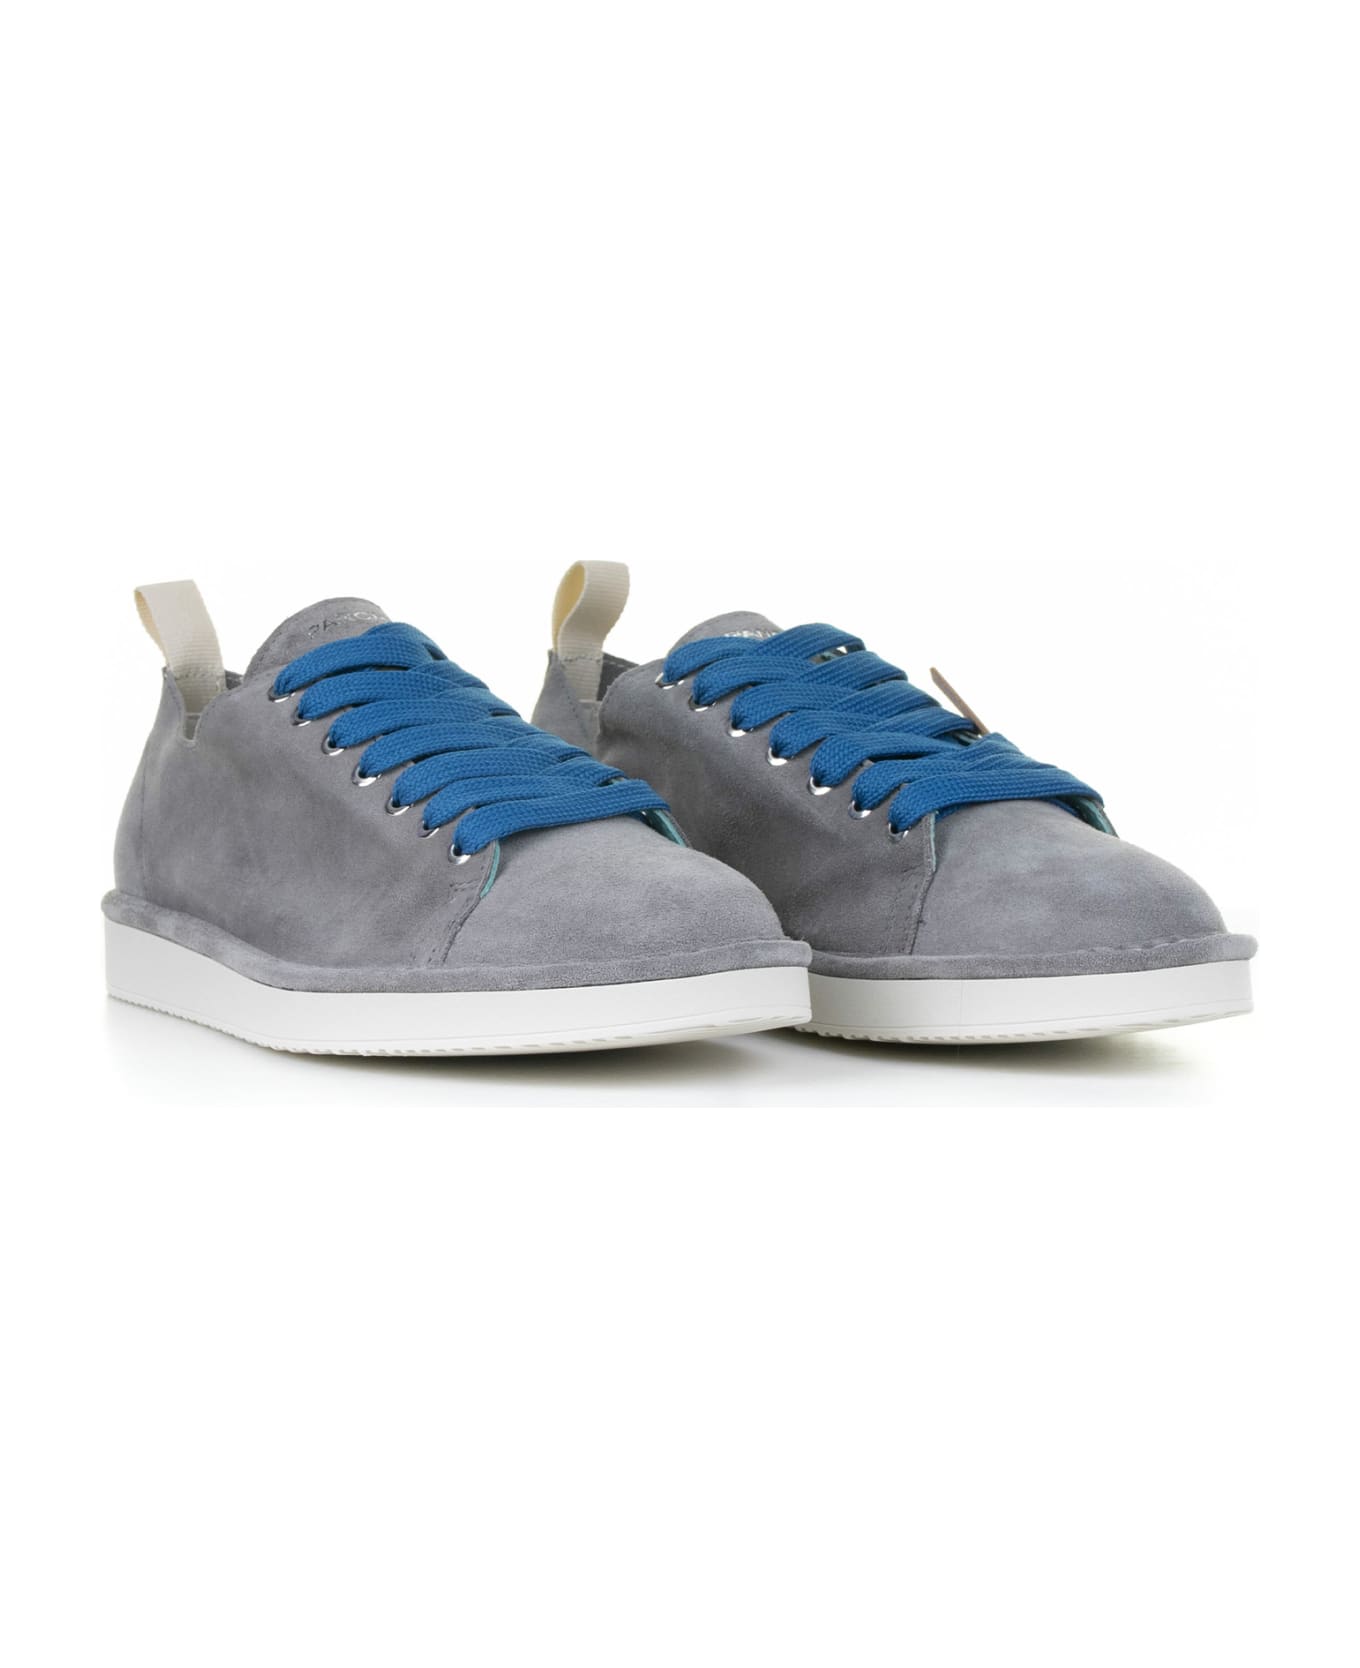 Panchic Gray Suede Sneaker - VIBRANT GRAY- TRUE BLUE